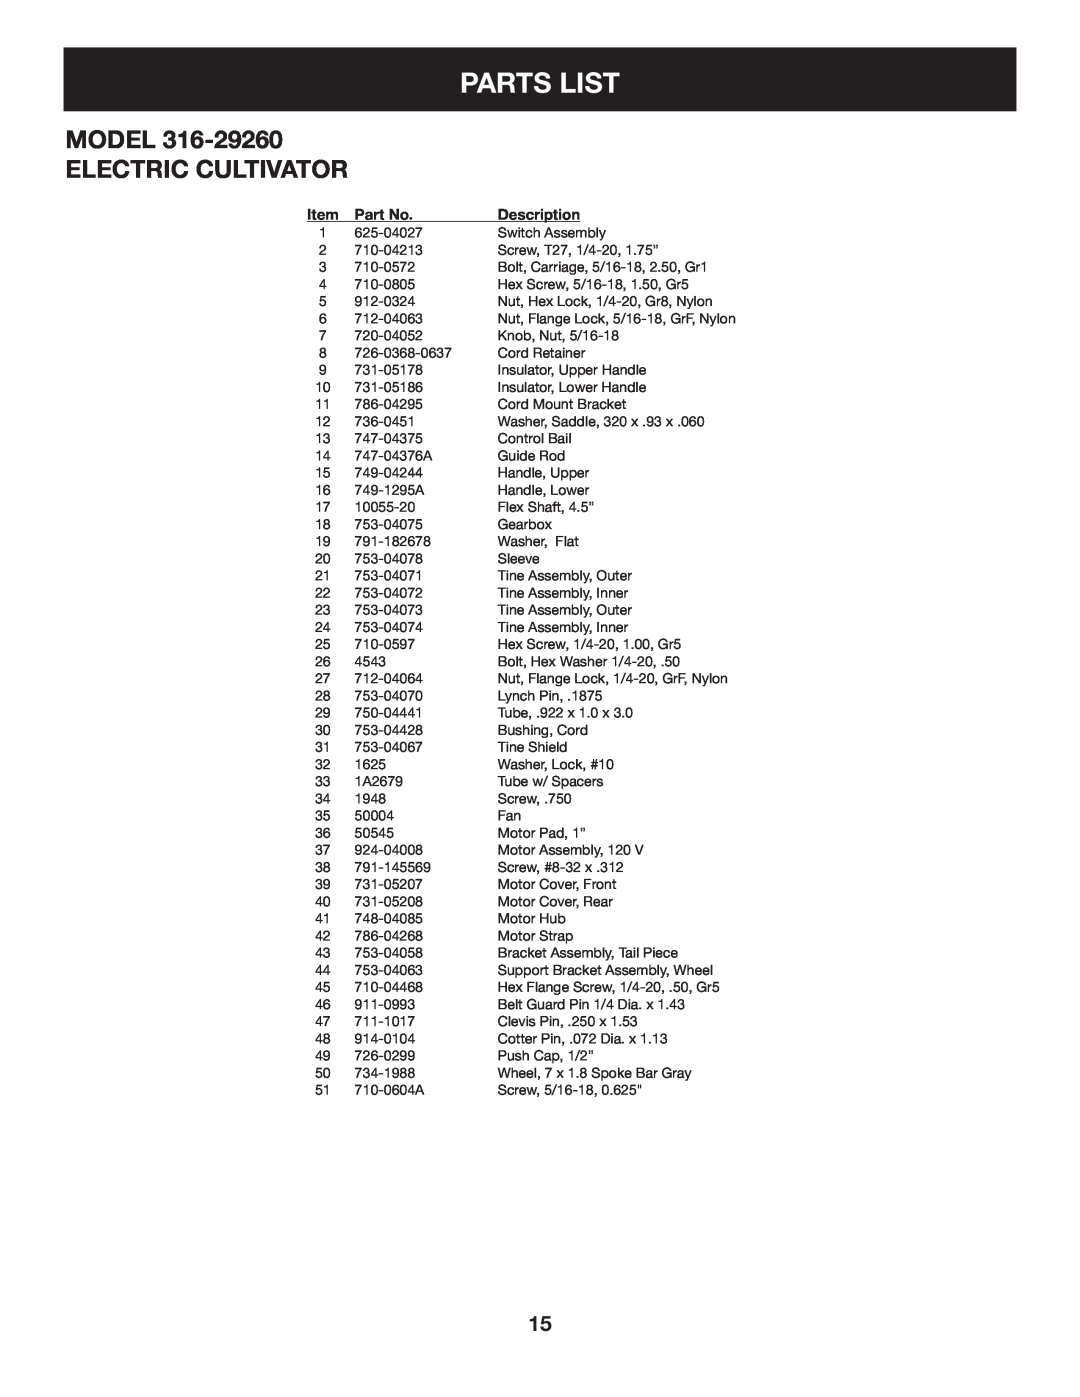 Craftsman 316.2926 manual Parts List, Model Electric Cultivator 